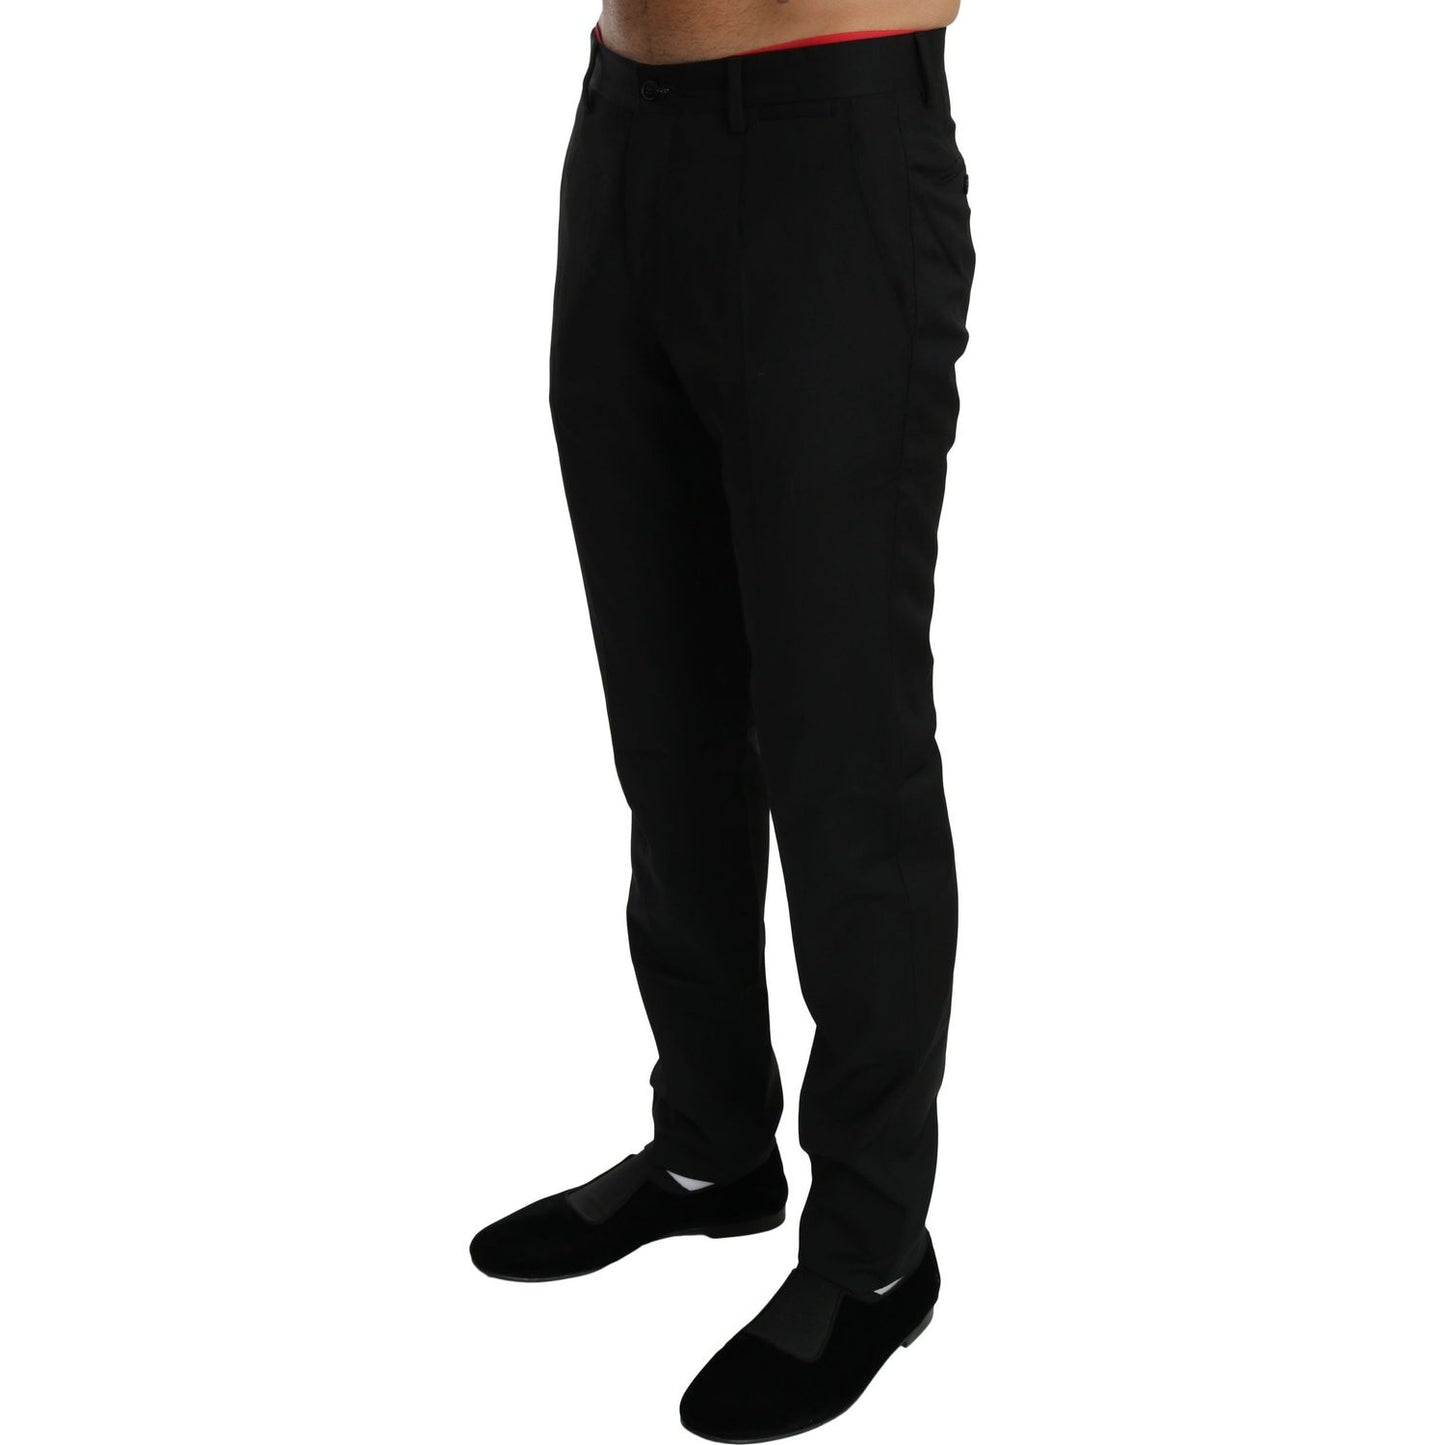 Dolce & Gabbana Elegant Black Wool Dress Pants Jeans & Pants black-dress-formal-trouser-mens-wool-pants IMG_1238-1-scaled-c5850ef4-45e.jpg